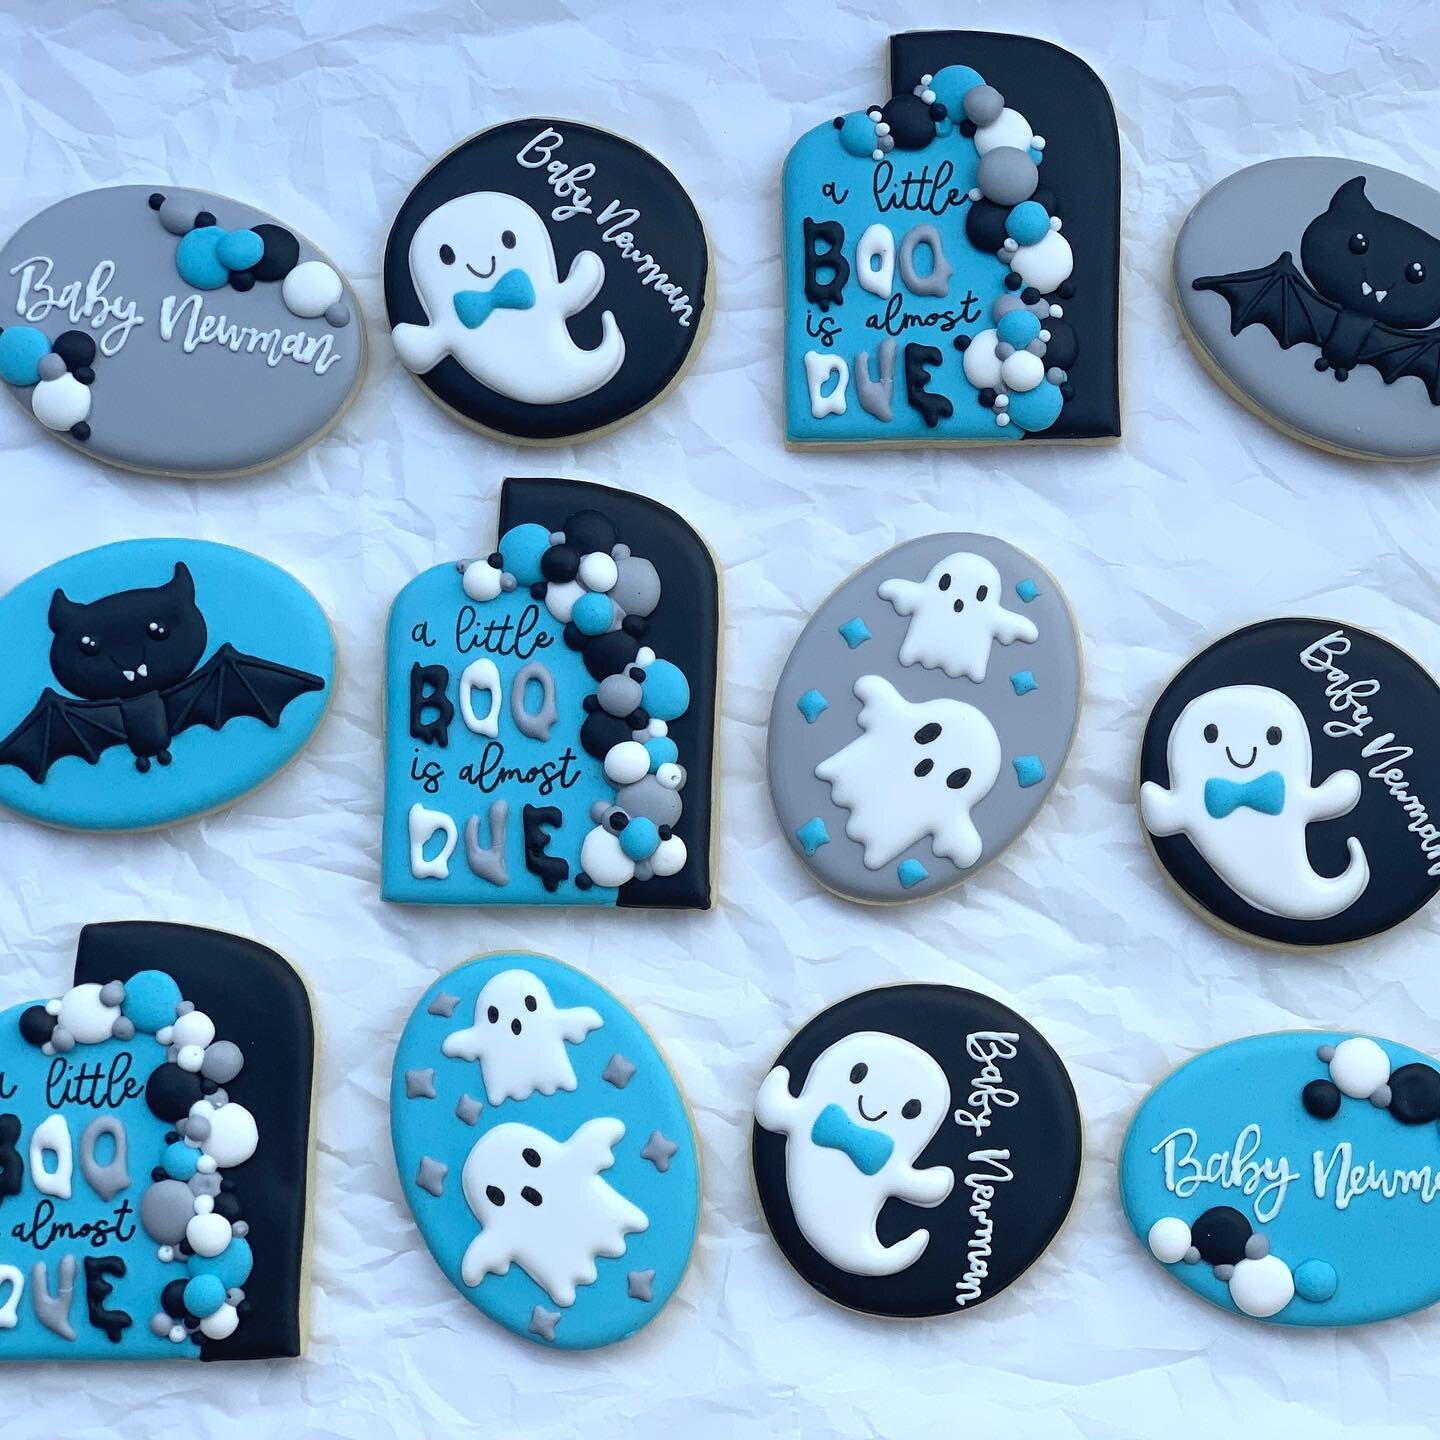 Still thinking about these hauntingly cute little boo cookies👻

#cookies #cookiesofinstagram #decoratedsugarcookies #halloweencookies #littleboo #littlebooisalmostdue #babyshowercookies #halloweenbabyshower #sandiego #sandiegobaker #sandiegobakerscl